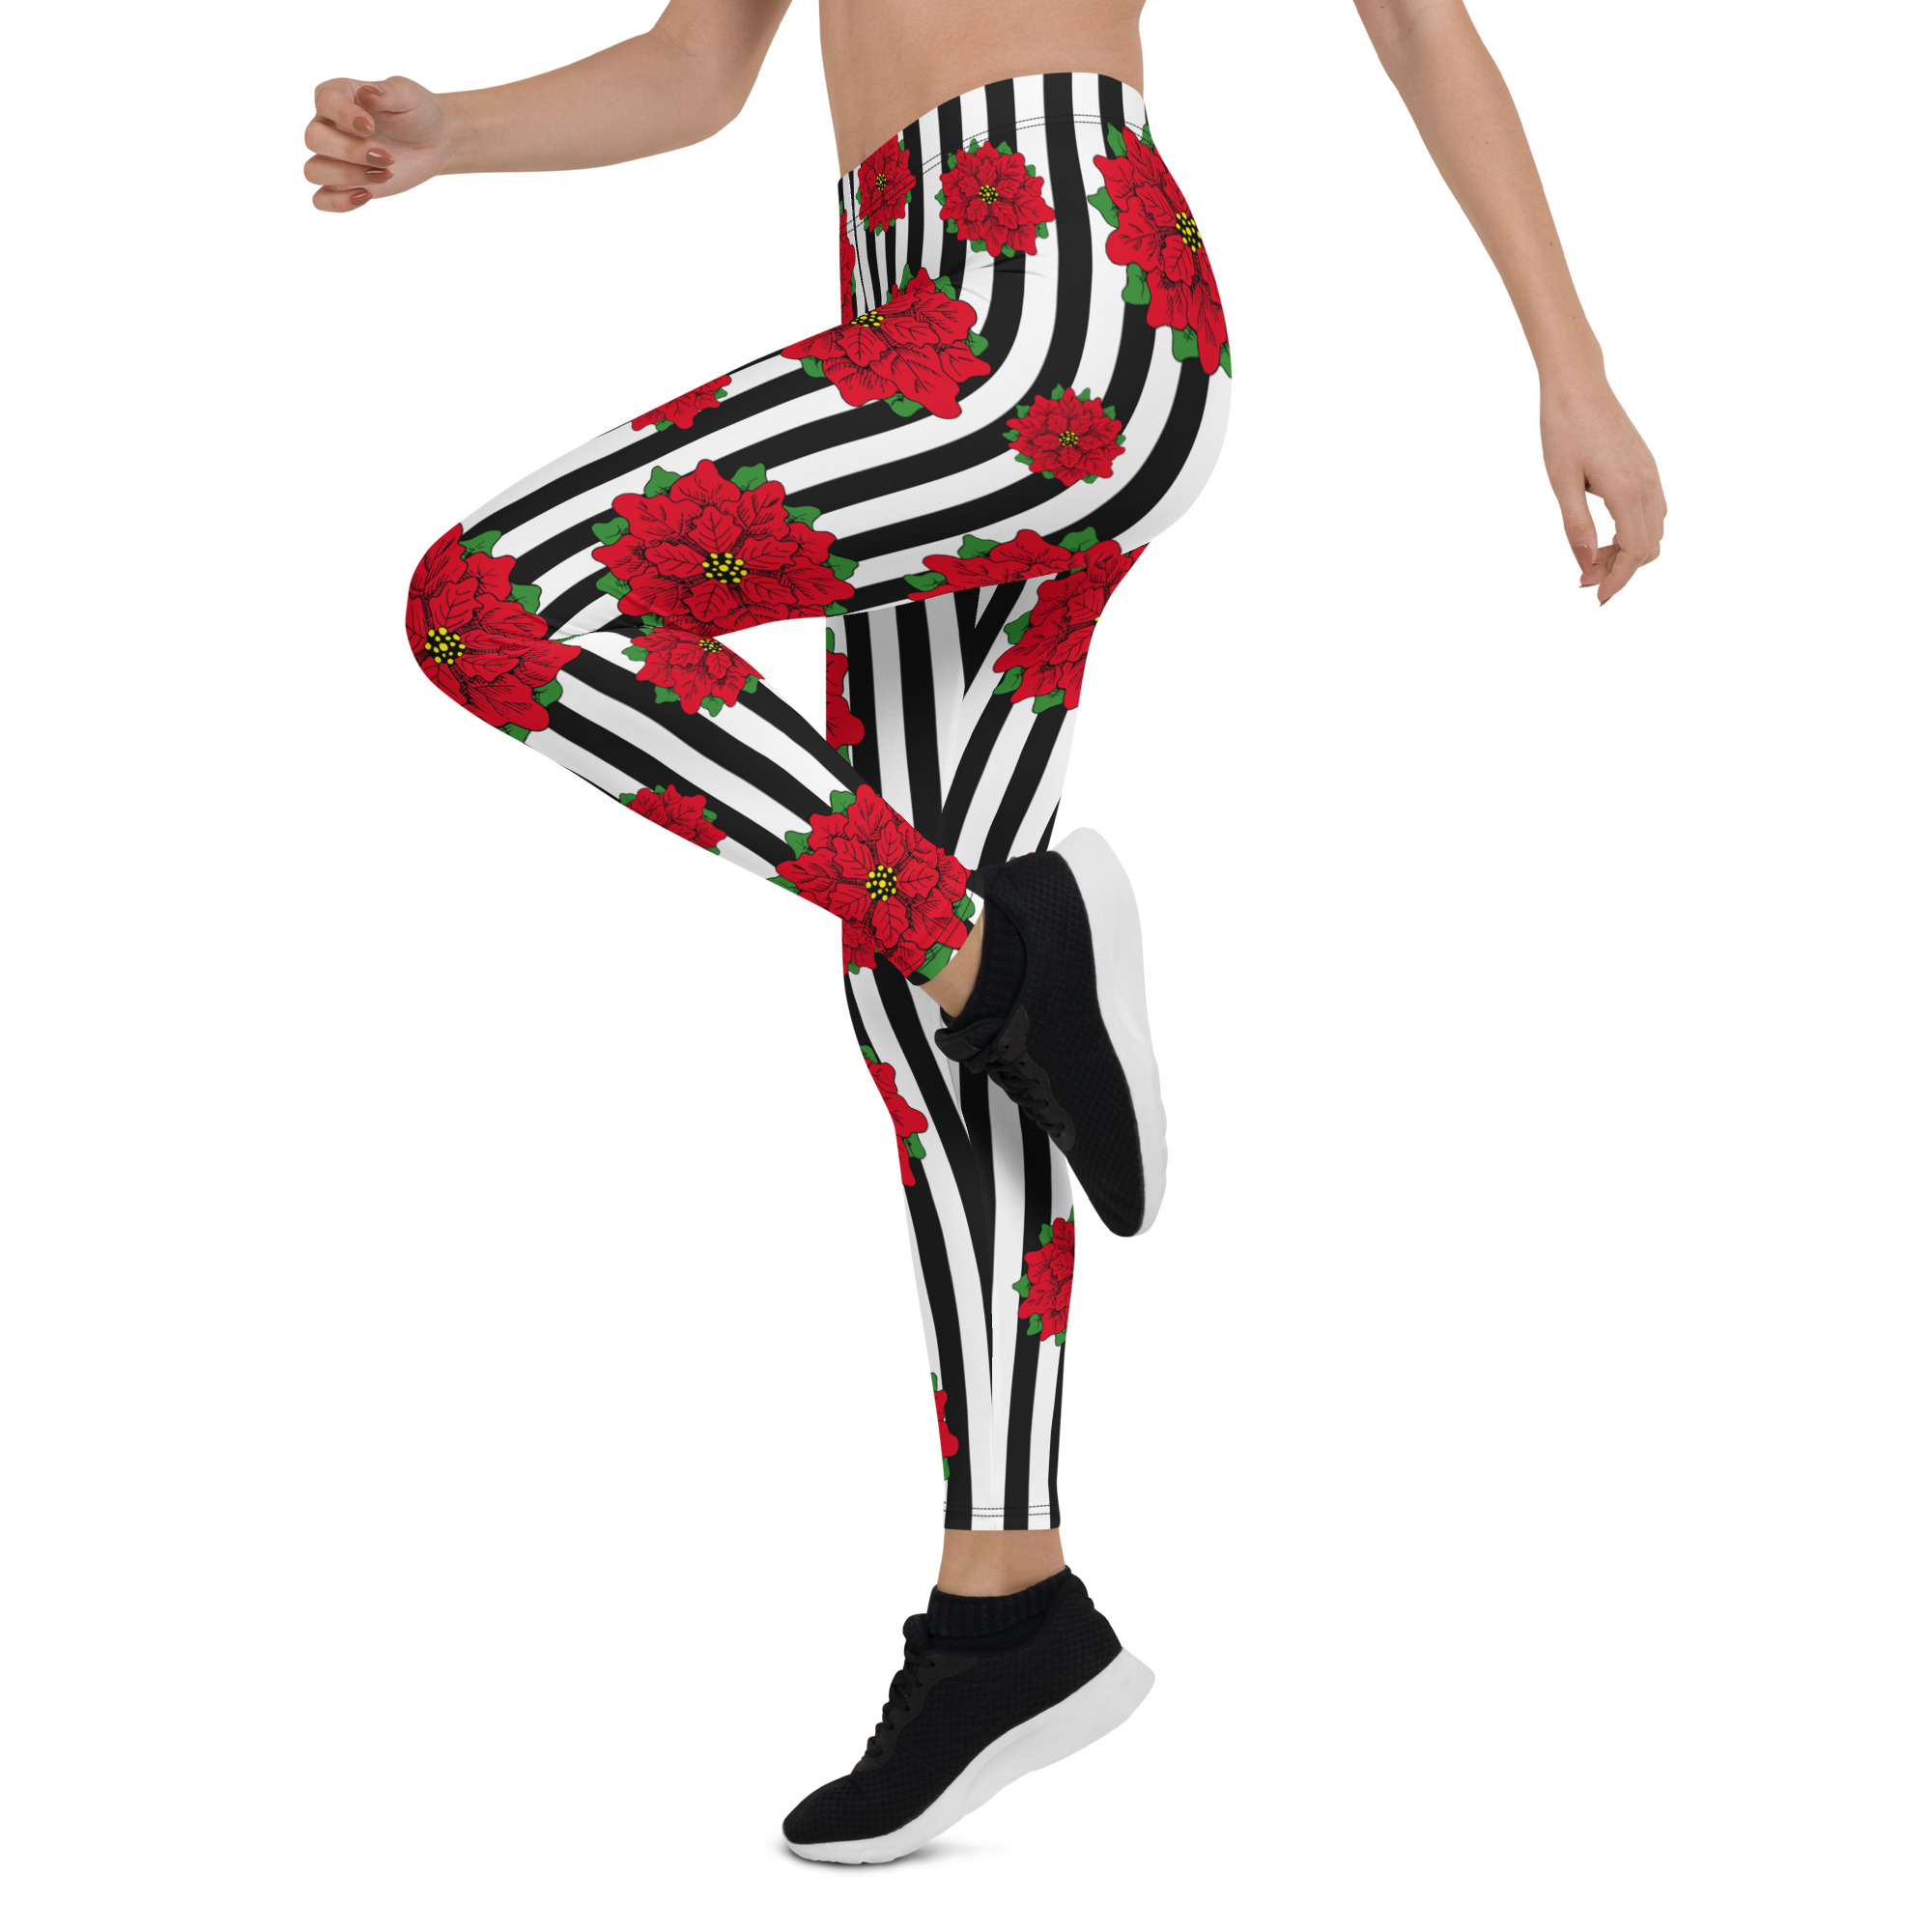 Red Christmas flower on black and white striped leggings – Xmas